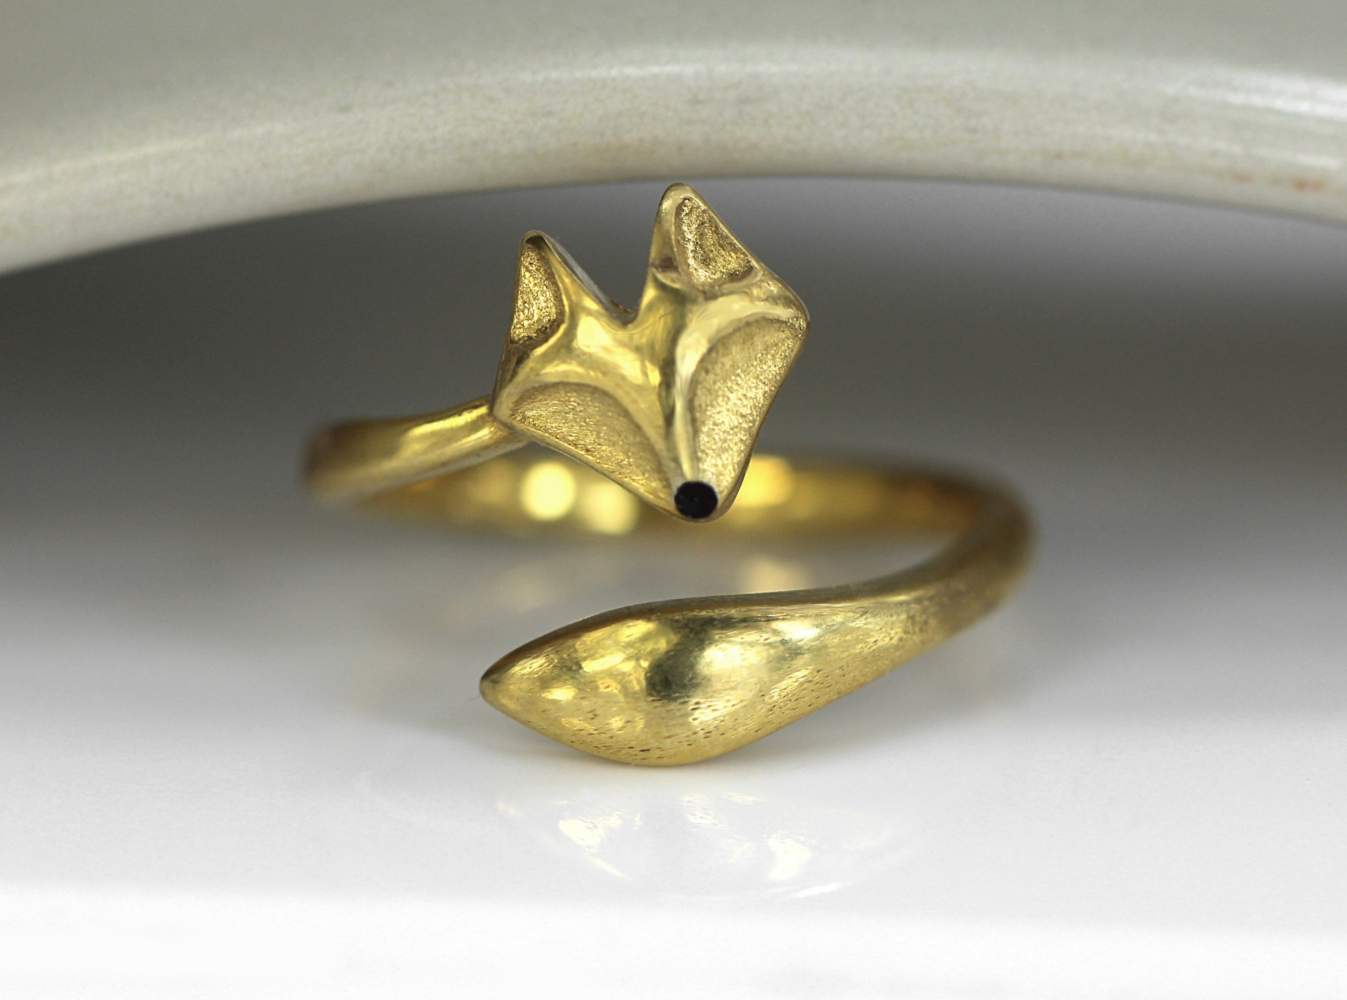 Fox ring. 18k vermeil gold over Sterling Silver. Adjustable